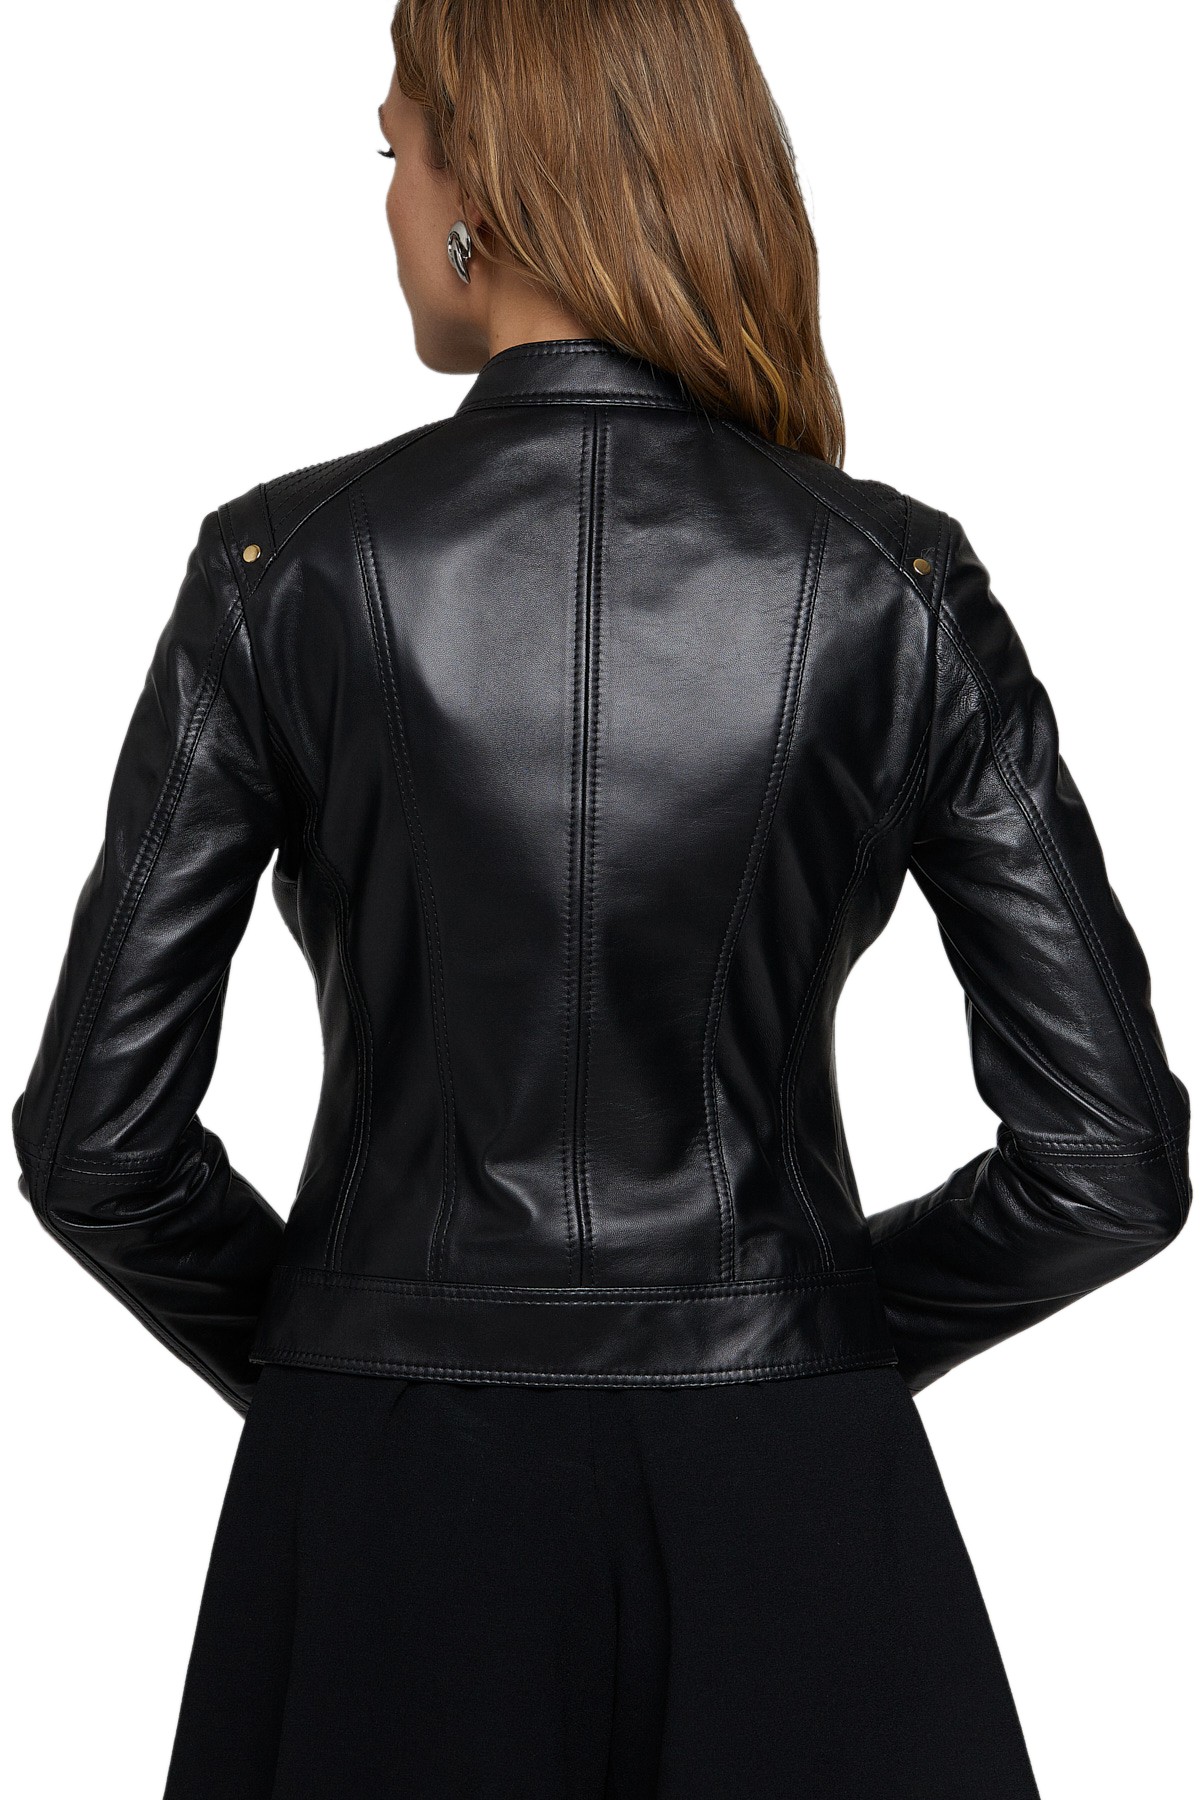 New Fashion Style Womens Leather Jackets Motorcycle Bomber Biker Black Real Leather Jacket Women 